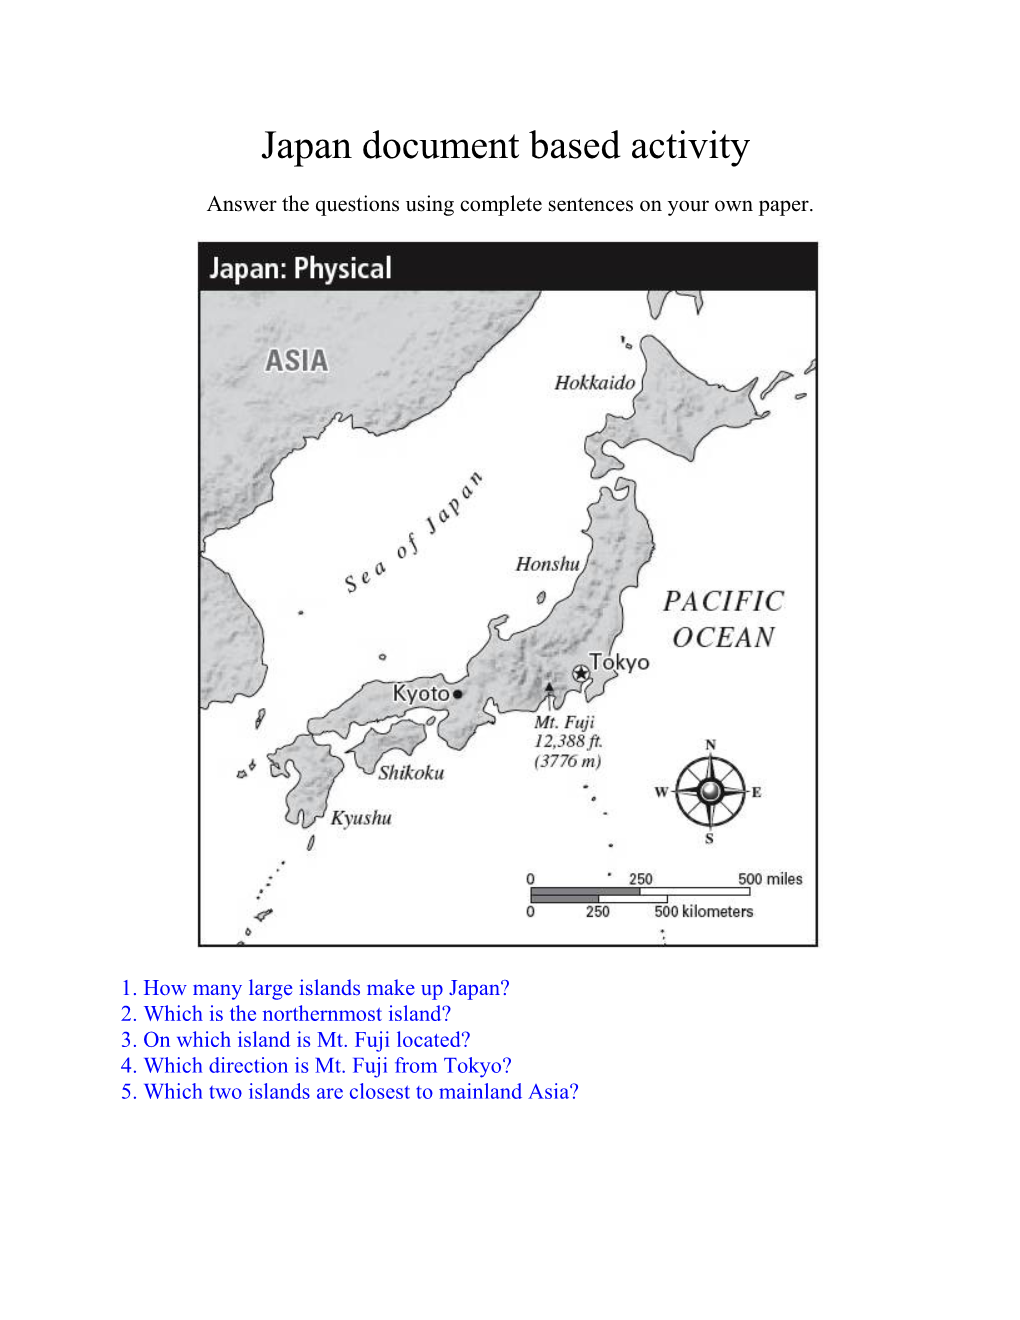 Japan Document Based Activity